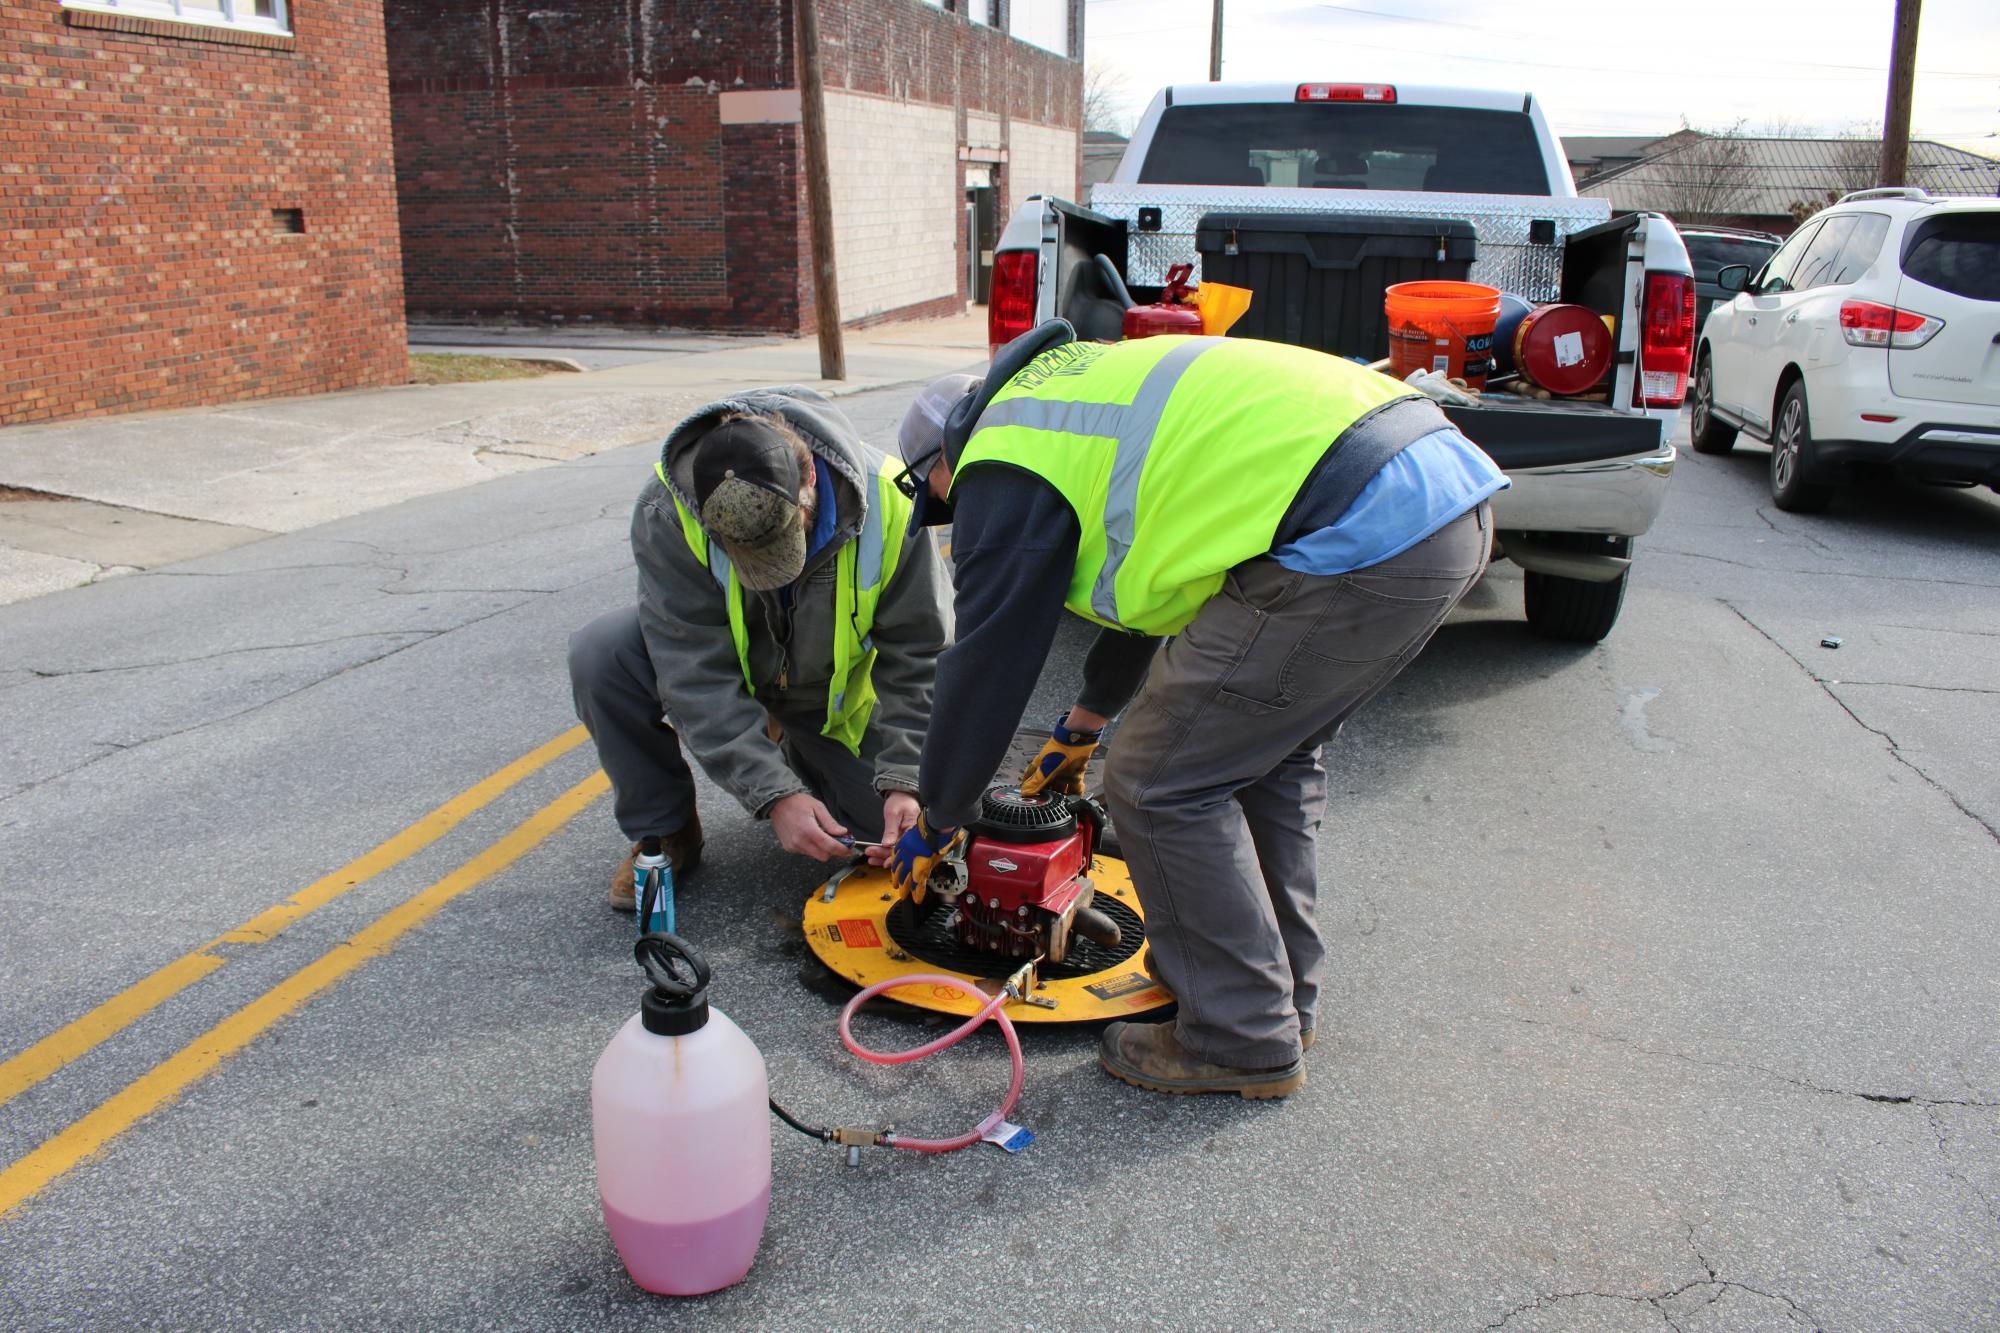 2 crew members working near a manhole